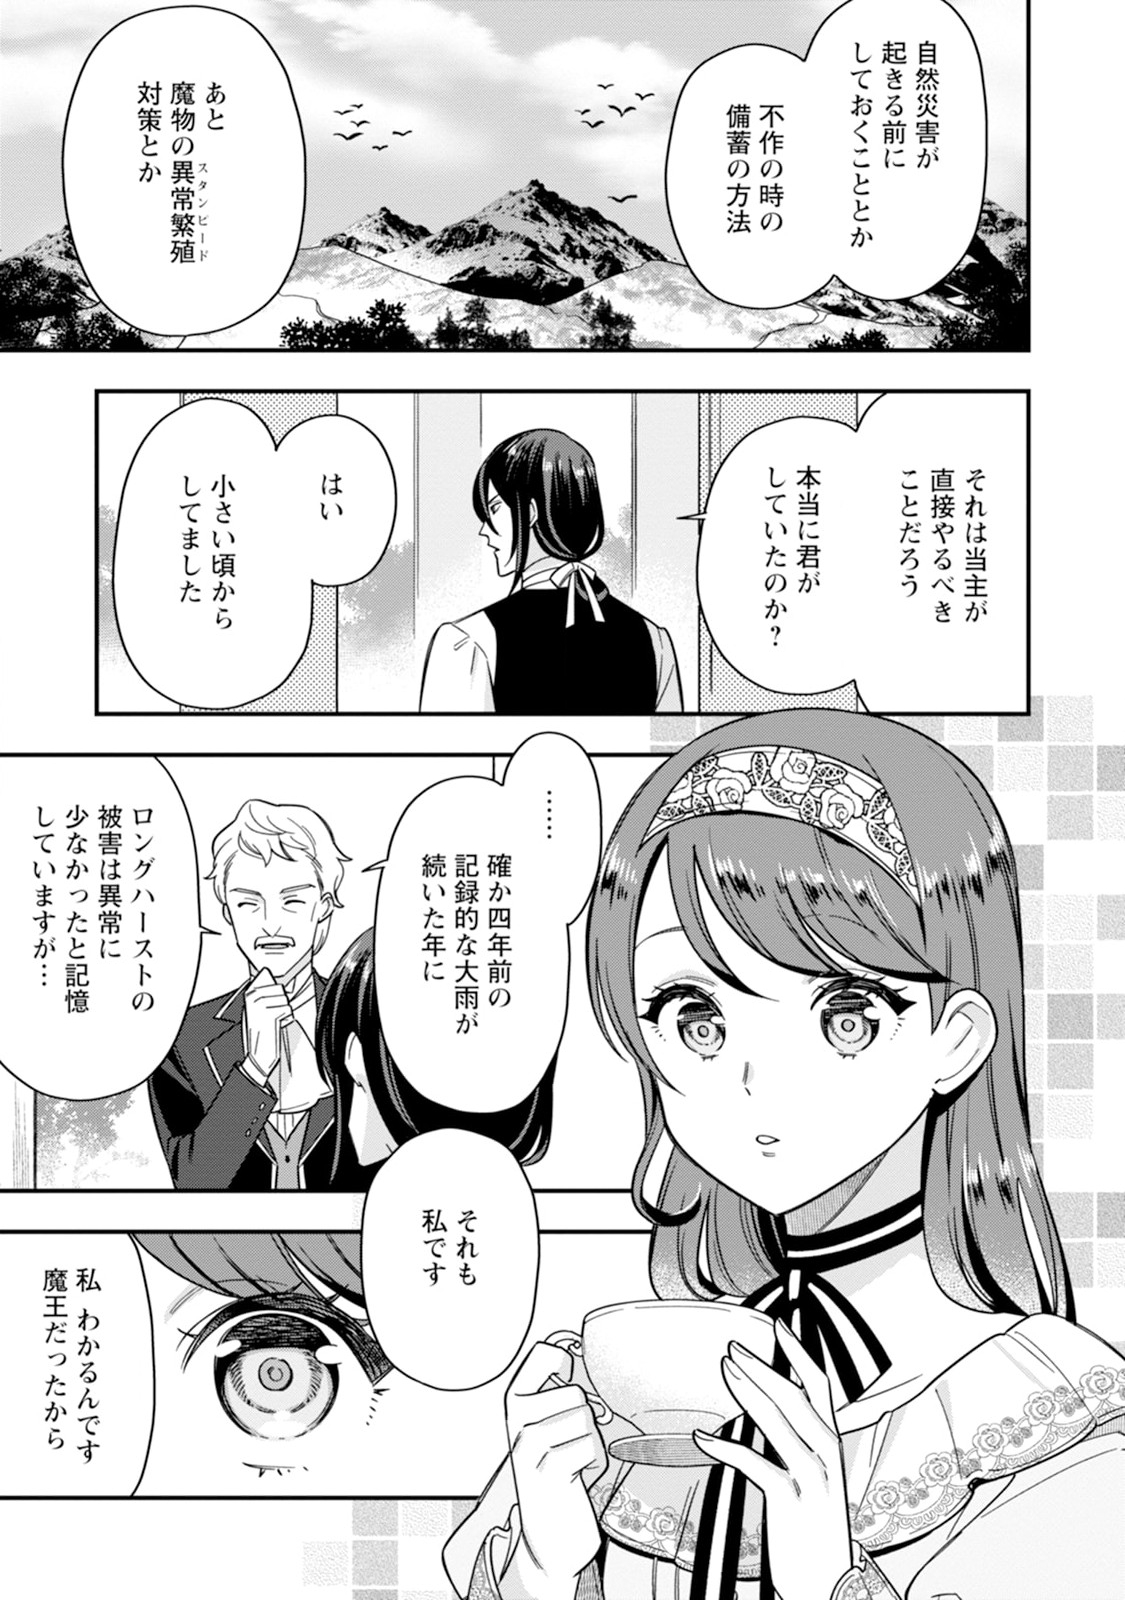 Aisanai to Iwaremashite mo - Chapter 2 - Page 17